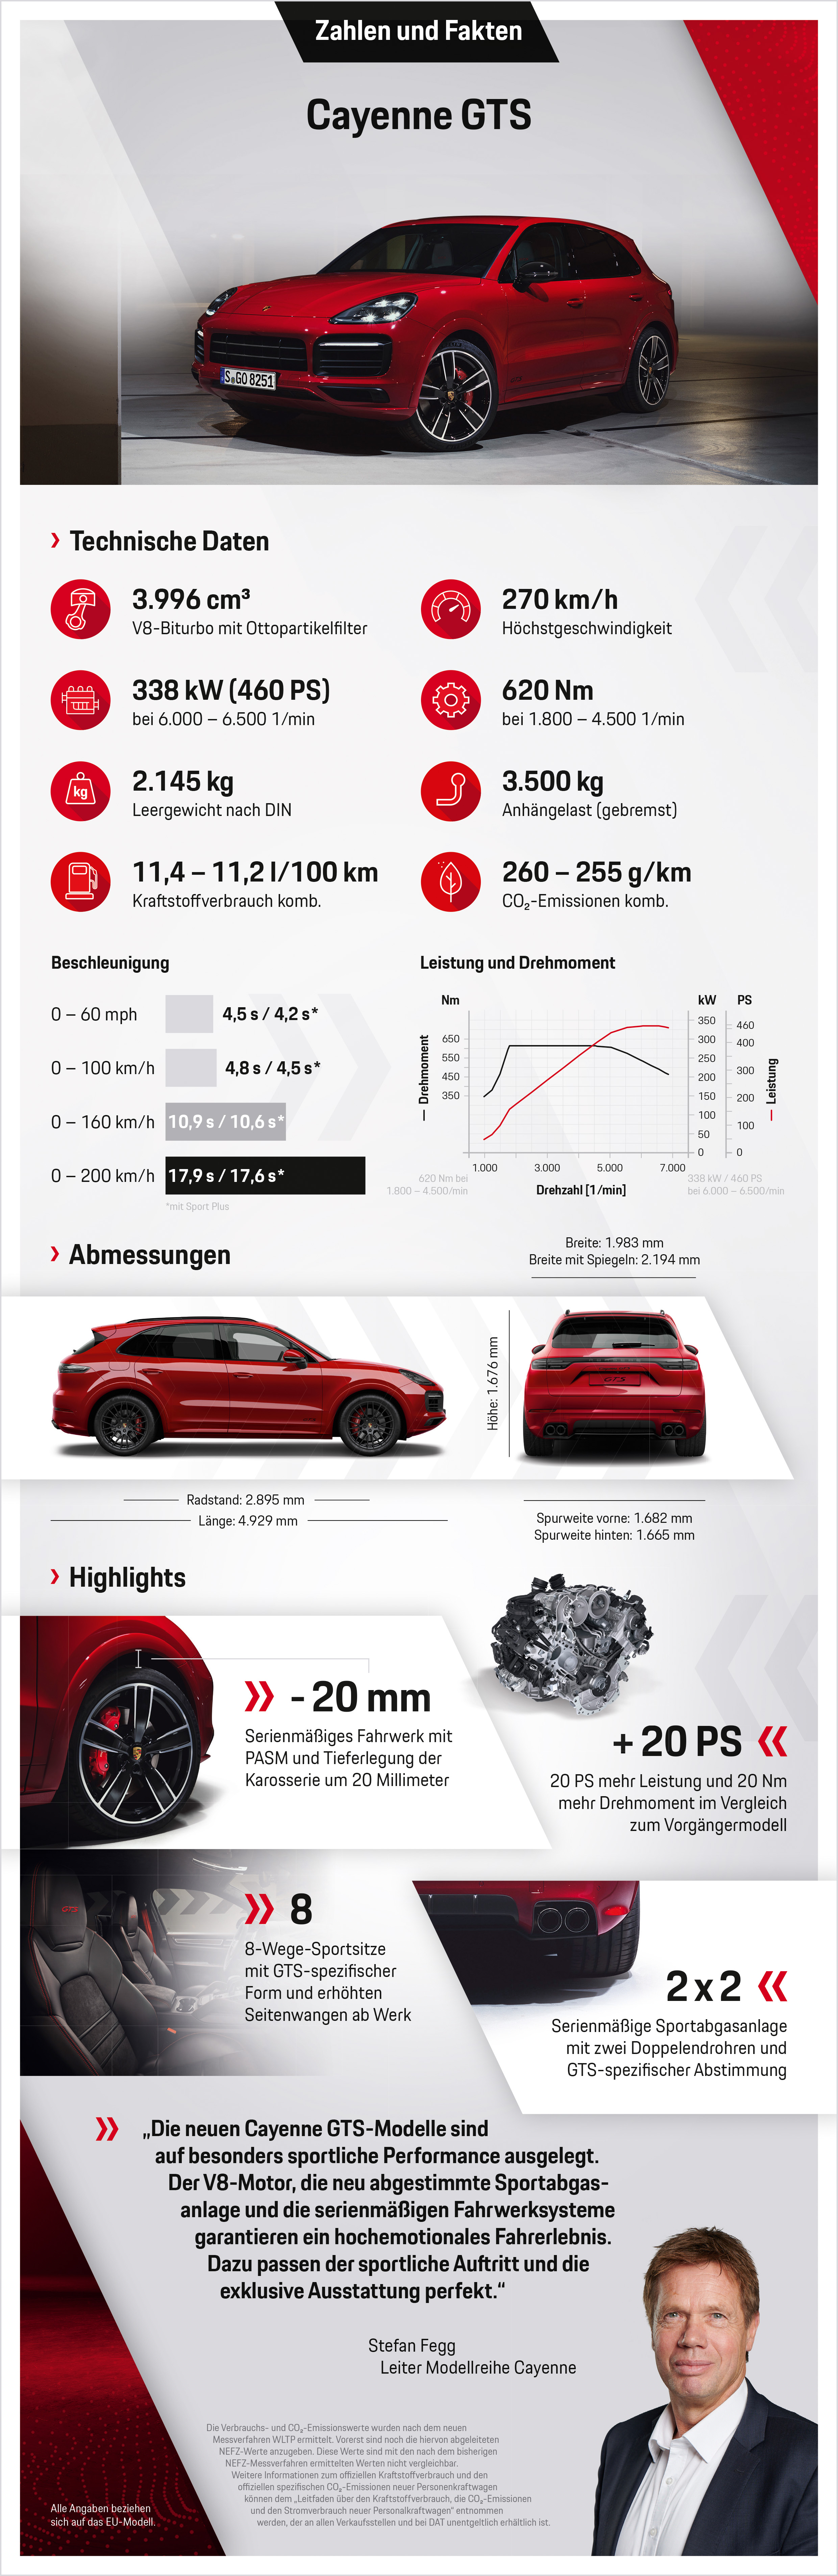 Cayenne GTS, Infografik, 2020, Porsche AG